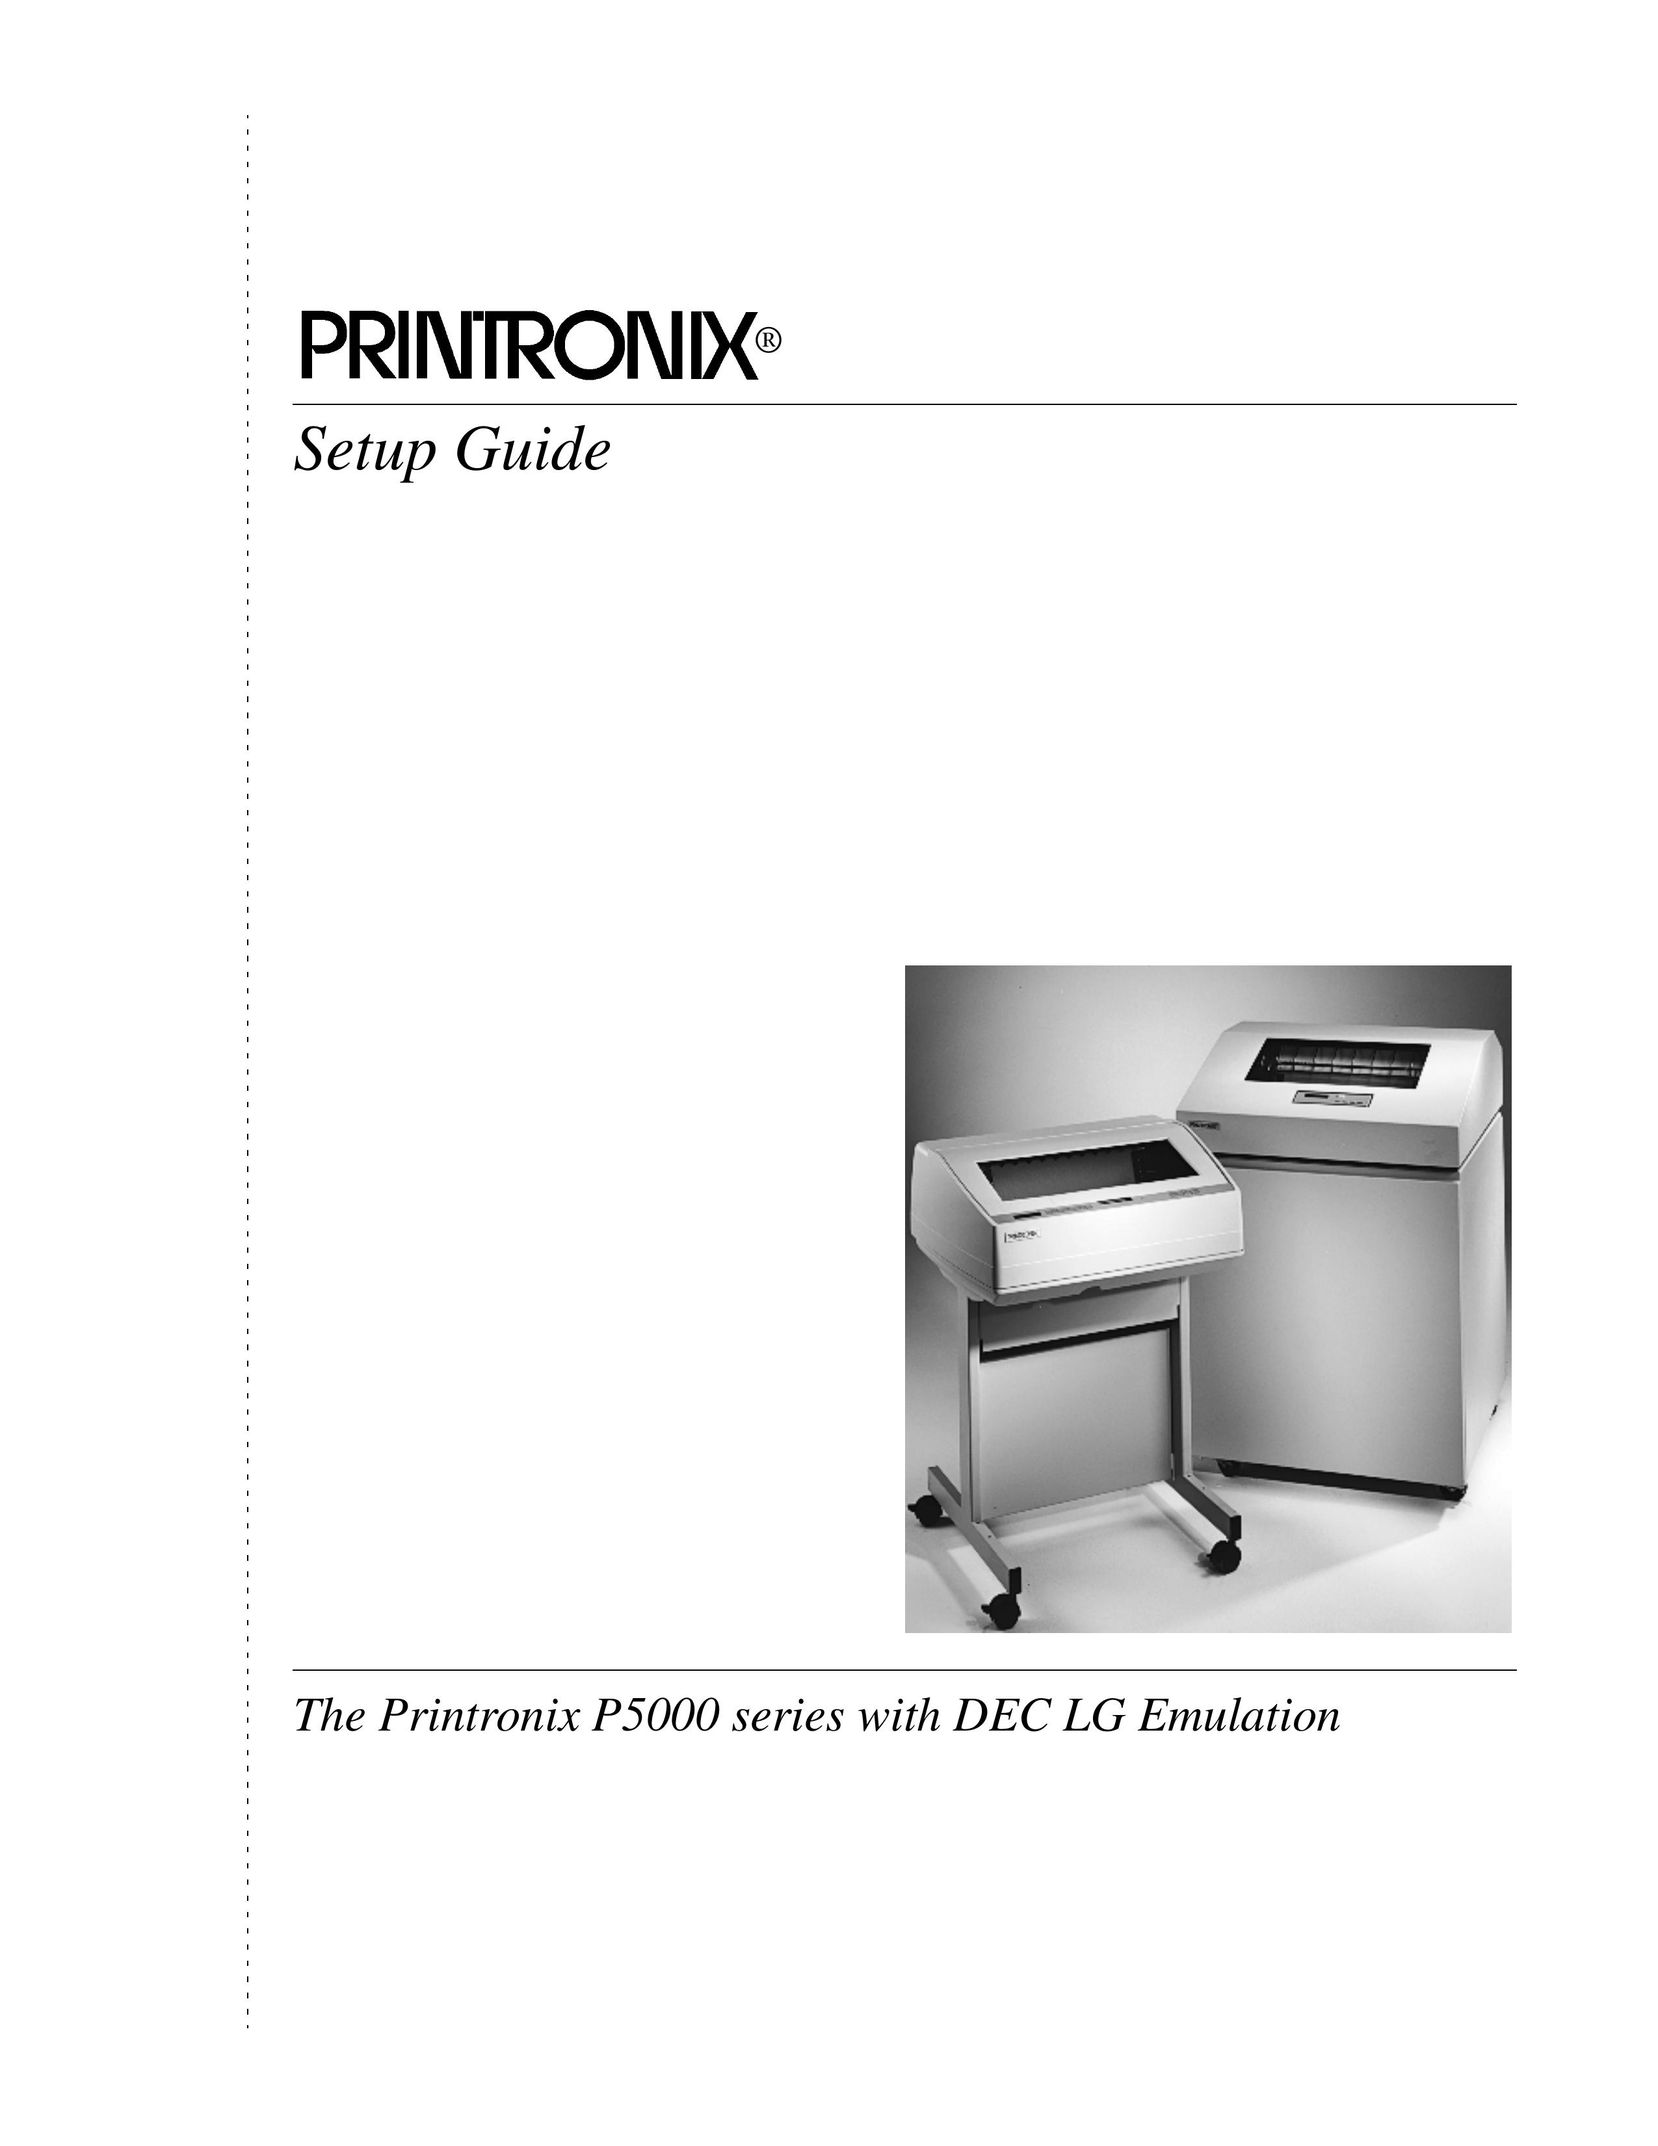 Compaq P5000 Series Printer User Manual